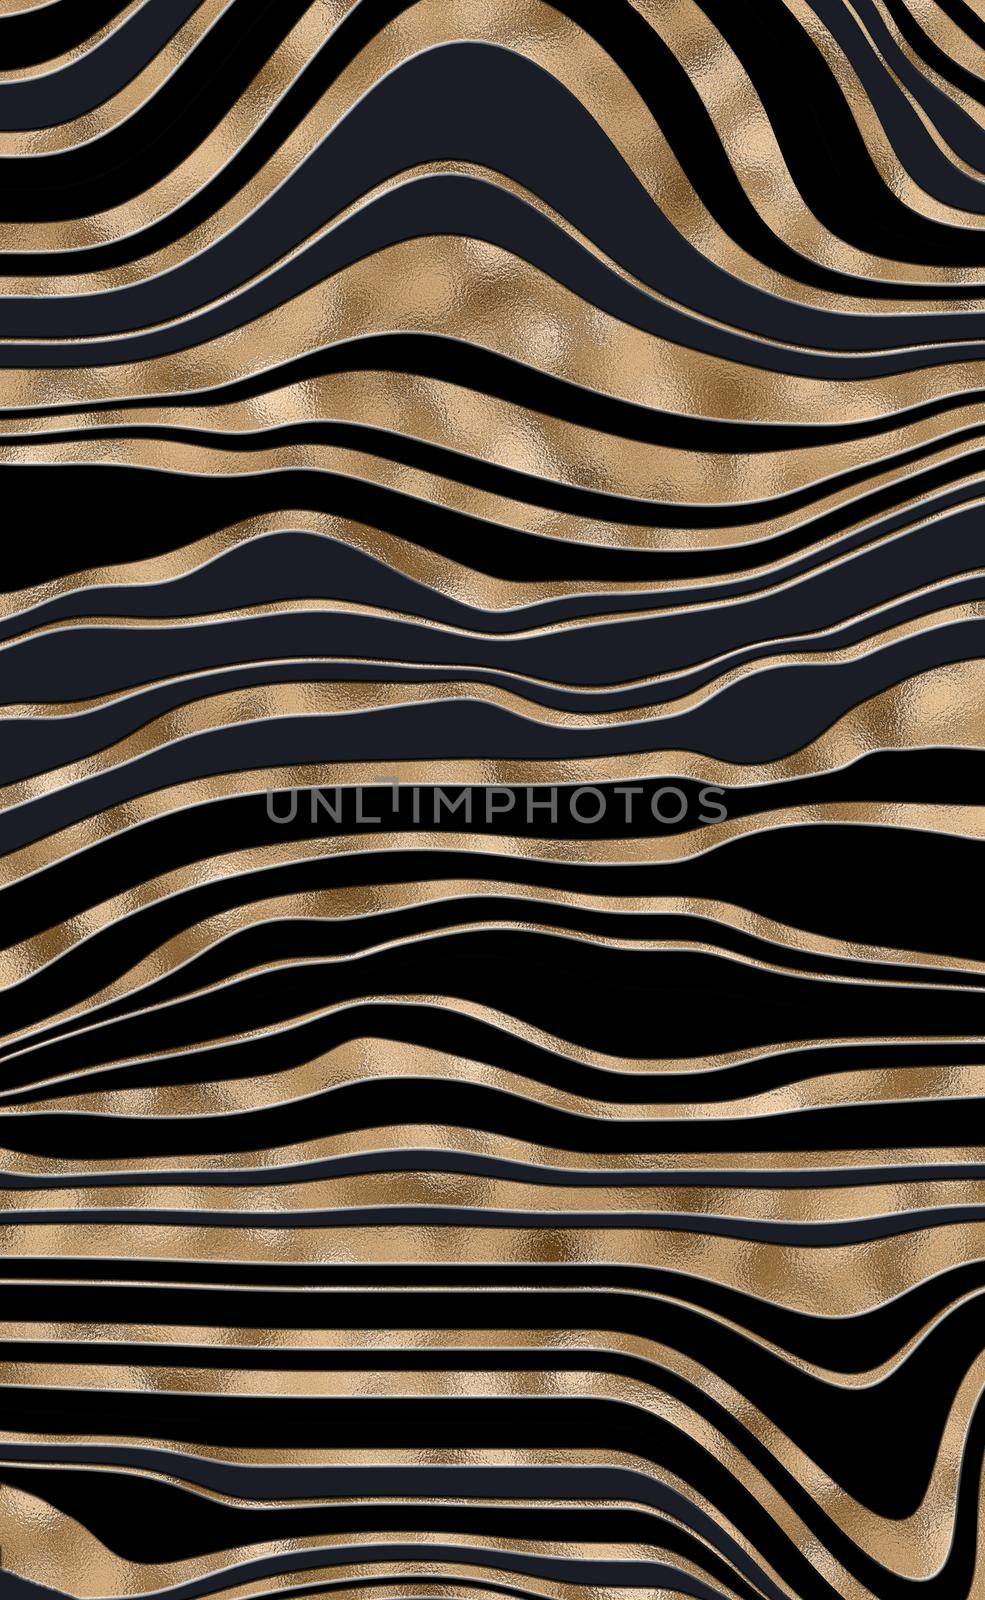 Zebra animal skin stripes, wavy with colourful black gold beautiful pattern. Safari, wildlife zoo natural background. African animal design. Vertical Illustration